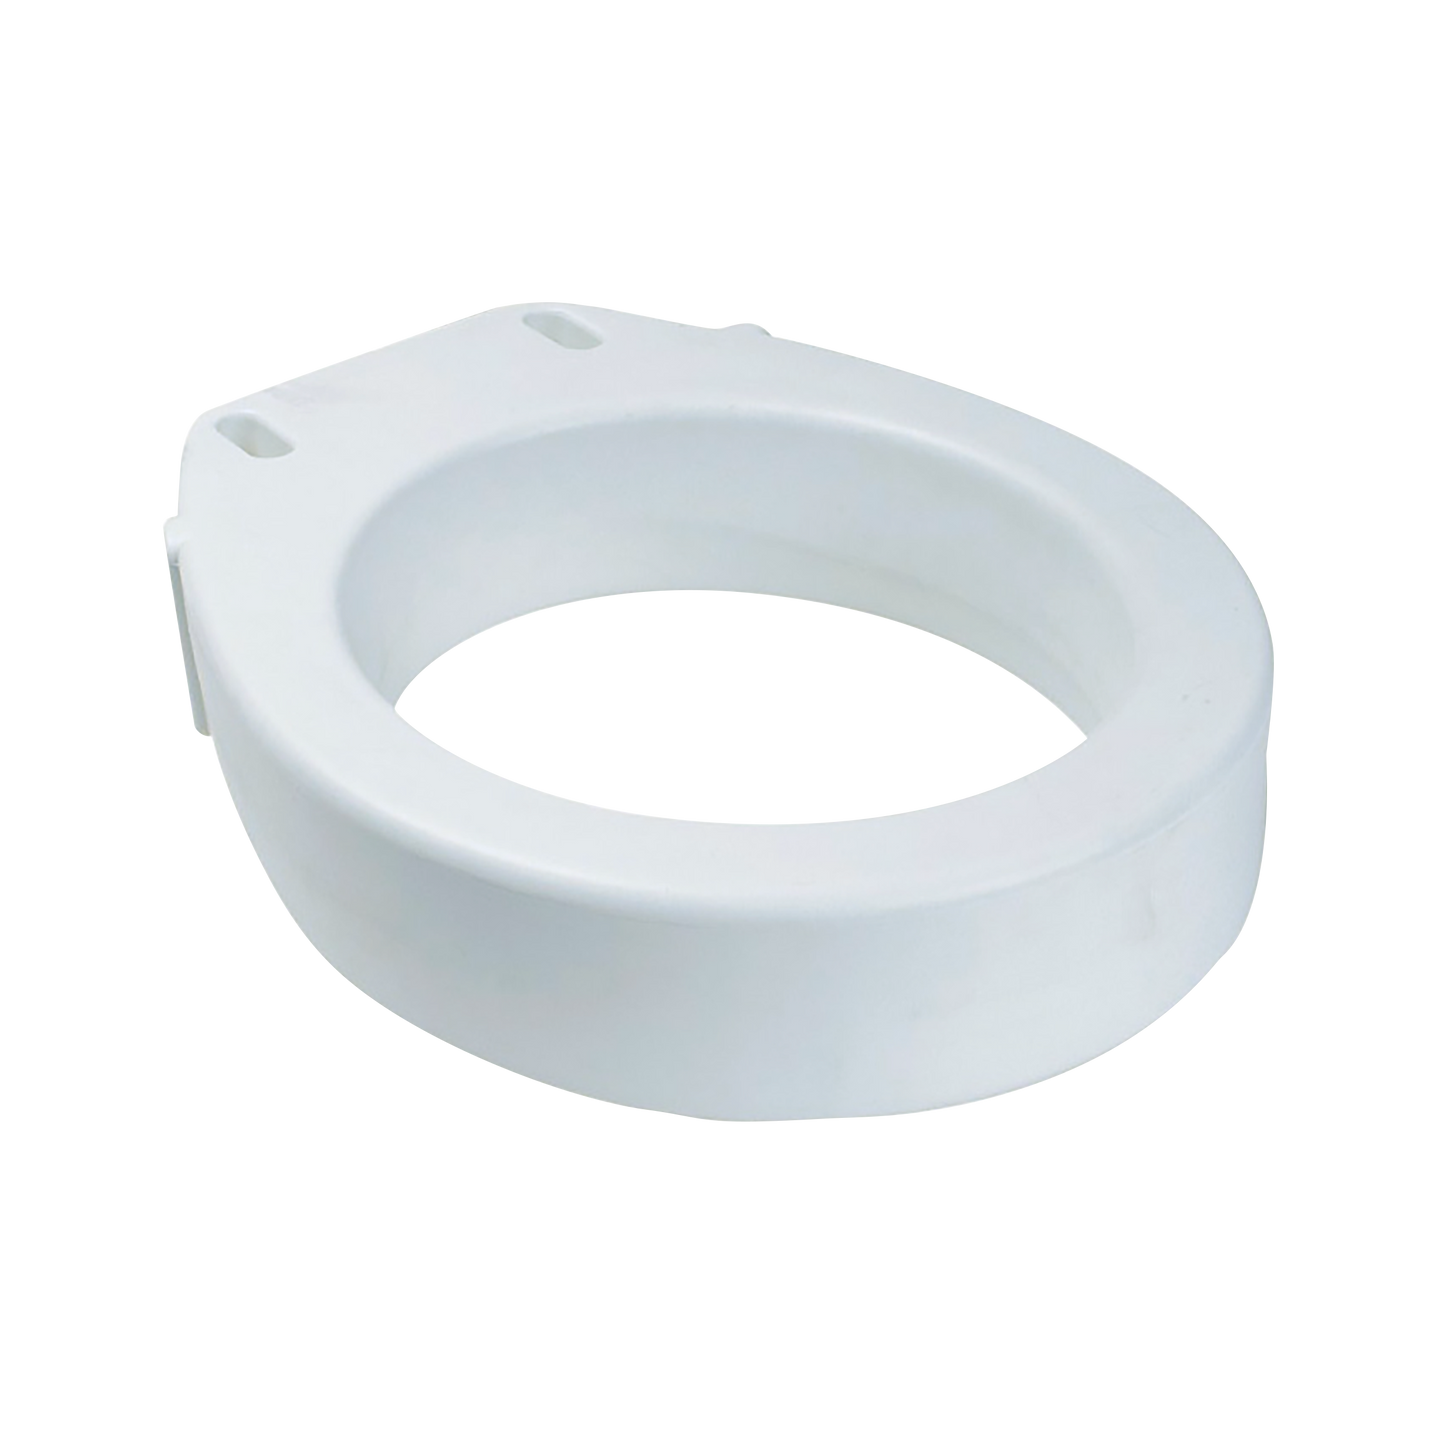 Dynarex Elongated Raised Toilet Seat w/out Arms, White, 1pc/bx